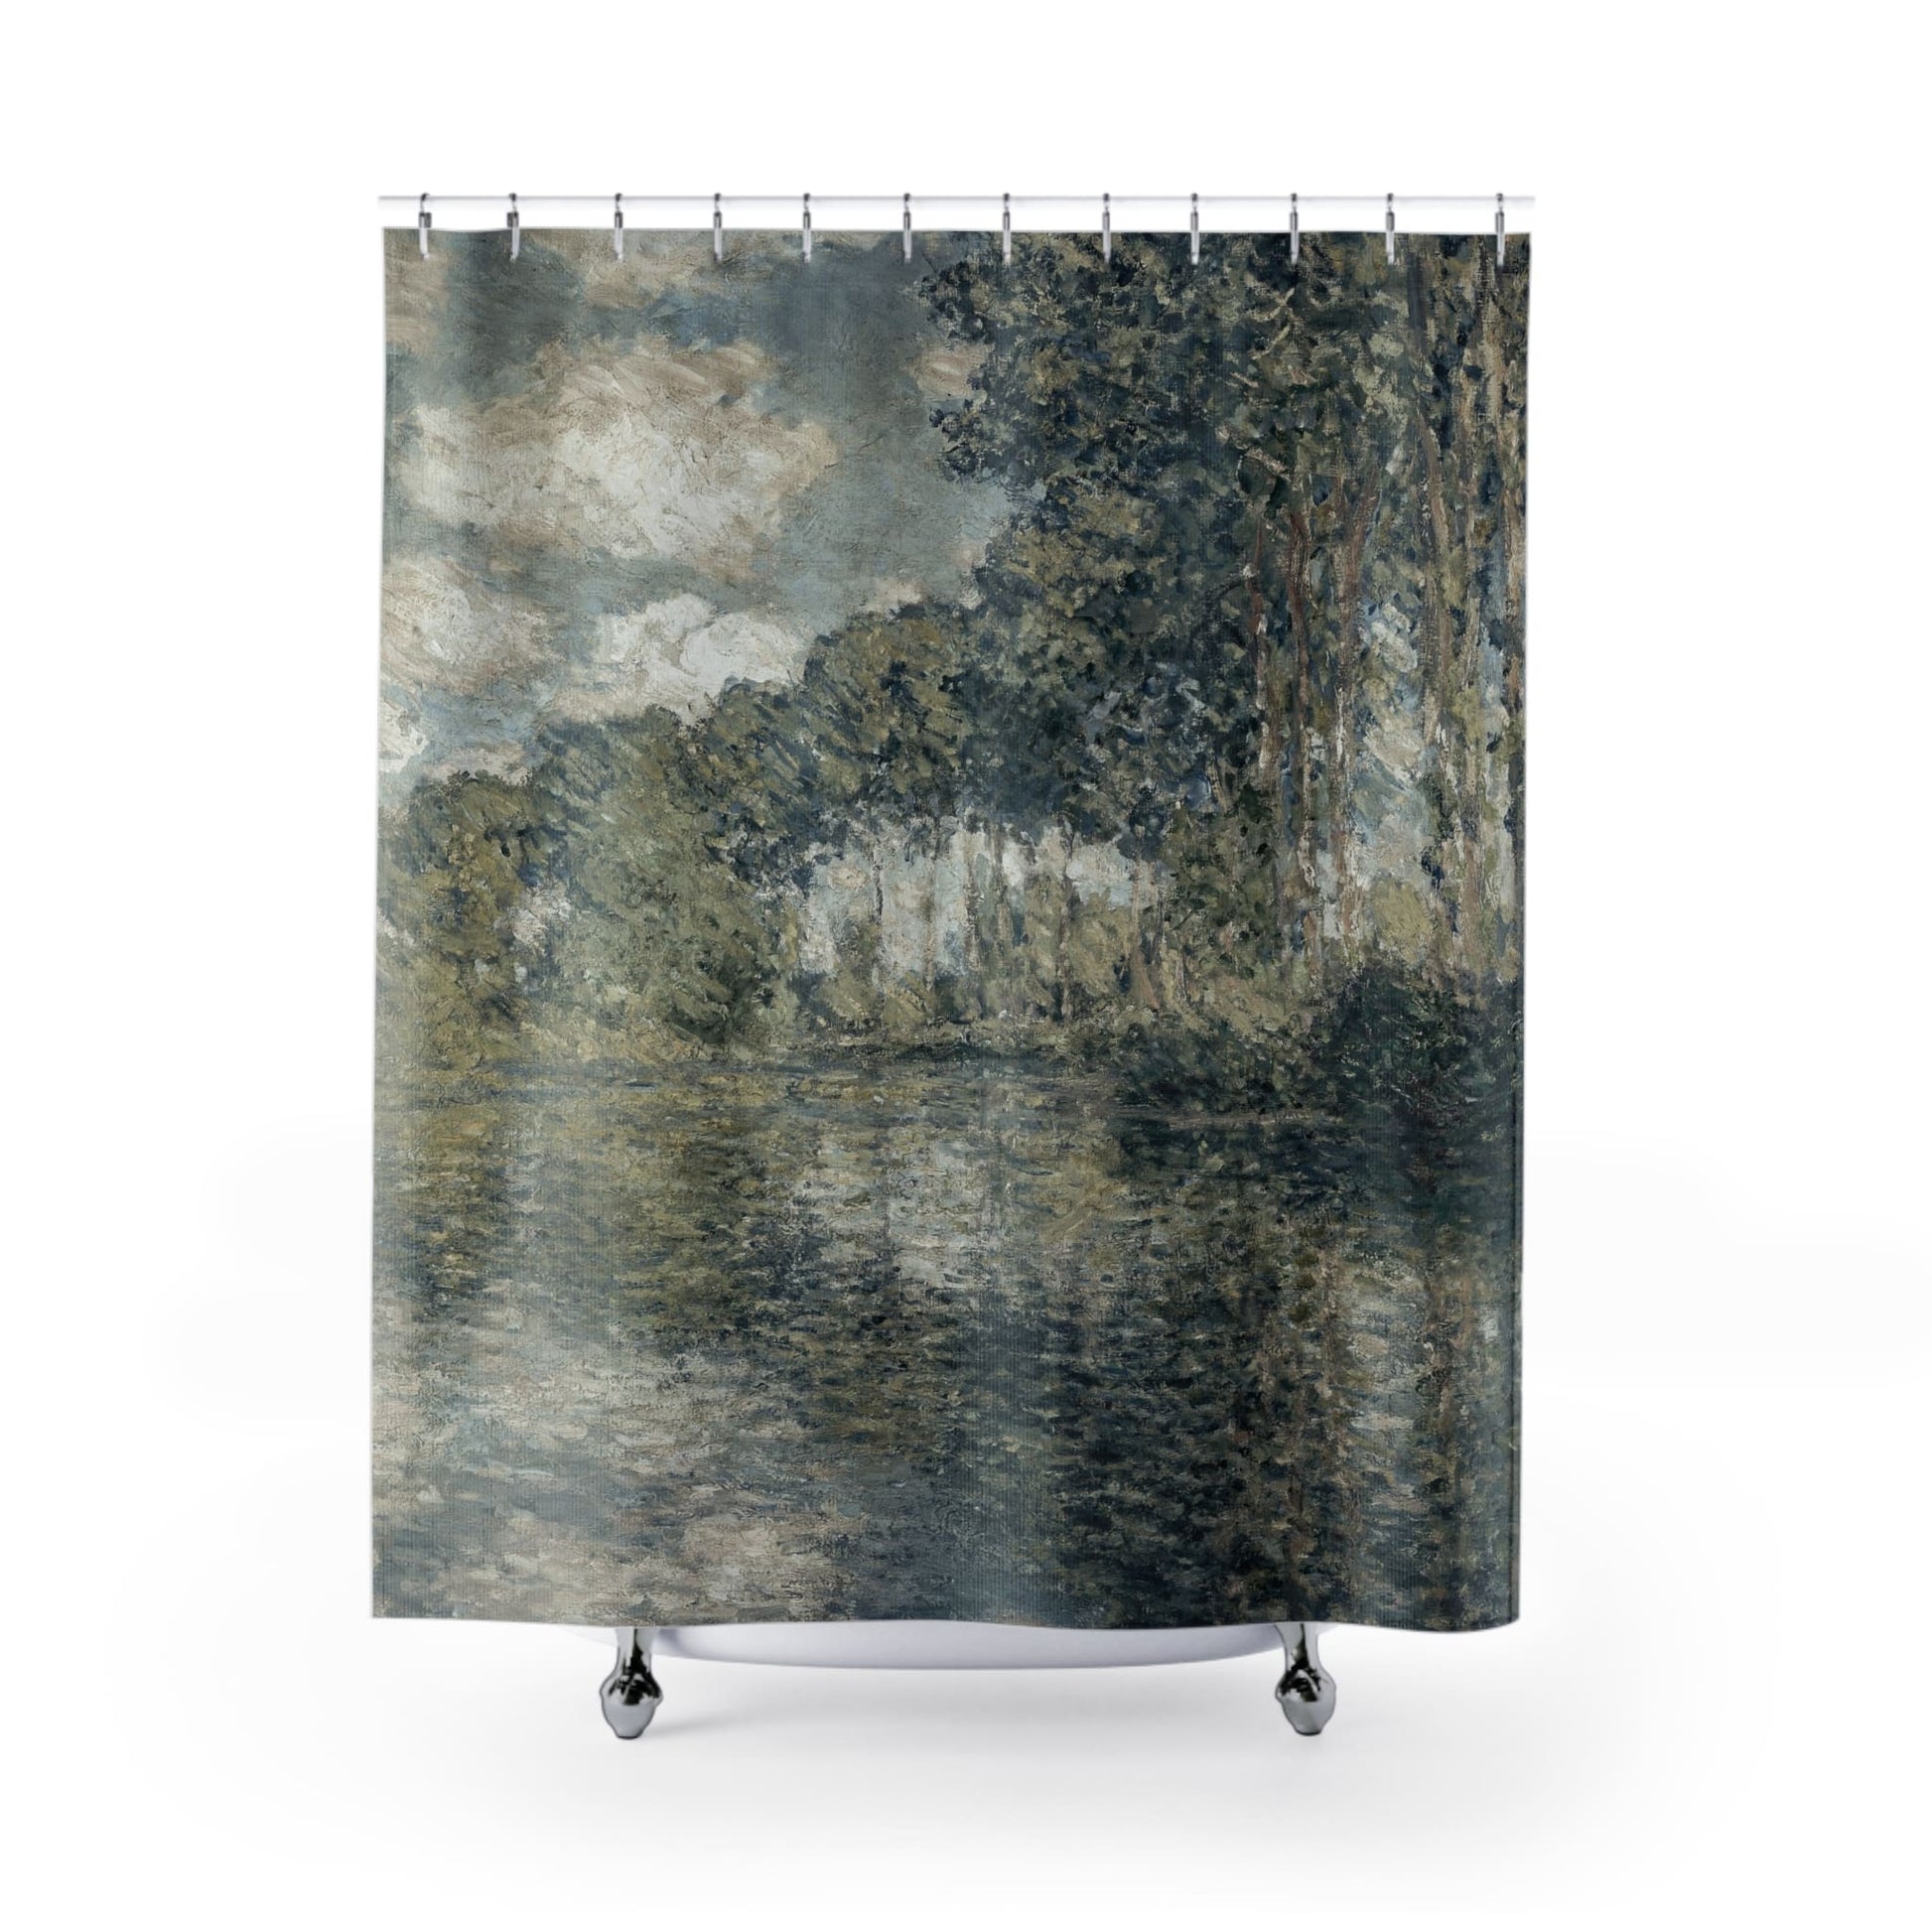 Dusty Sage Landscape Shower Curtain with Claude Monet design, serene bathroom decor showcasing Monet's landscape artwork.